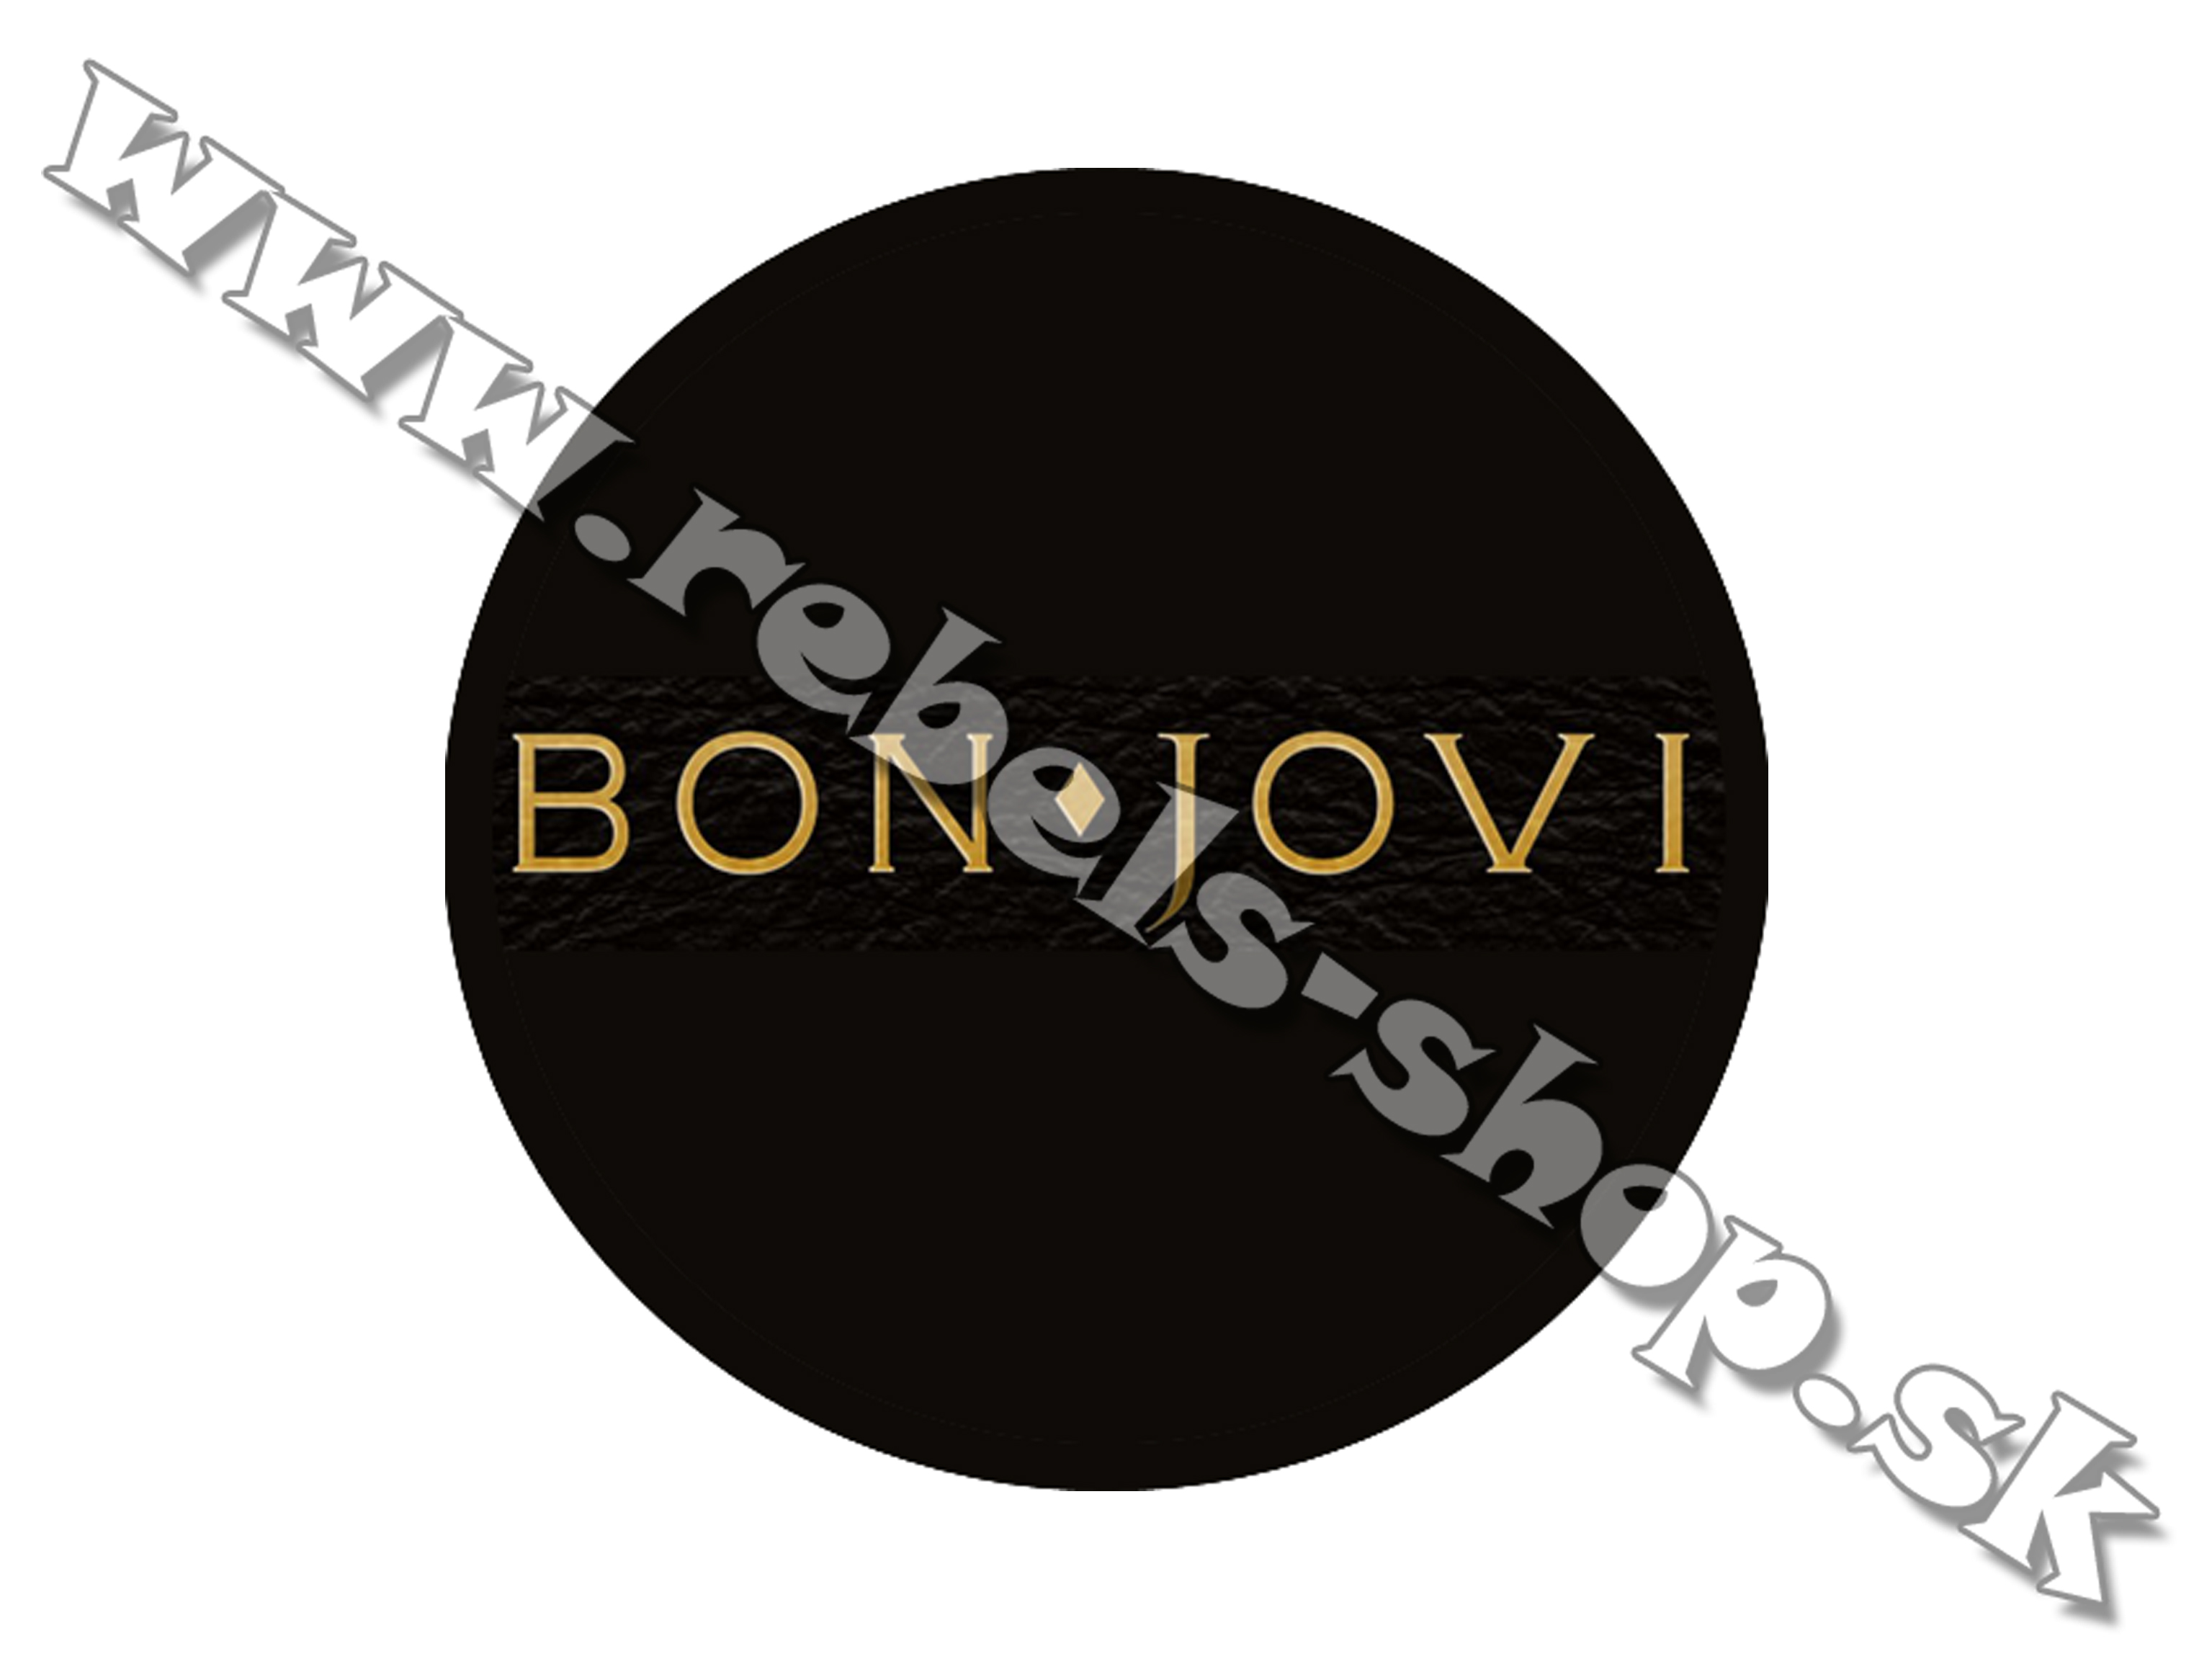 Odznak "Bon Jovi"